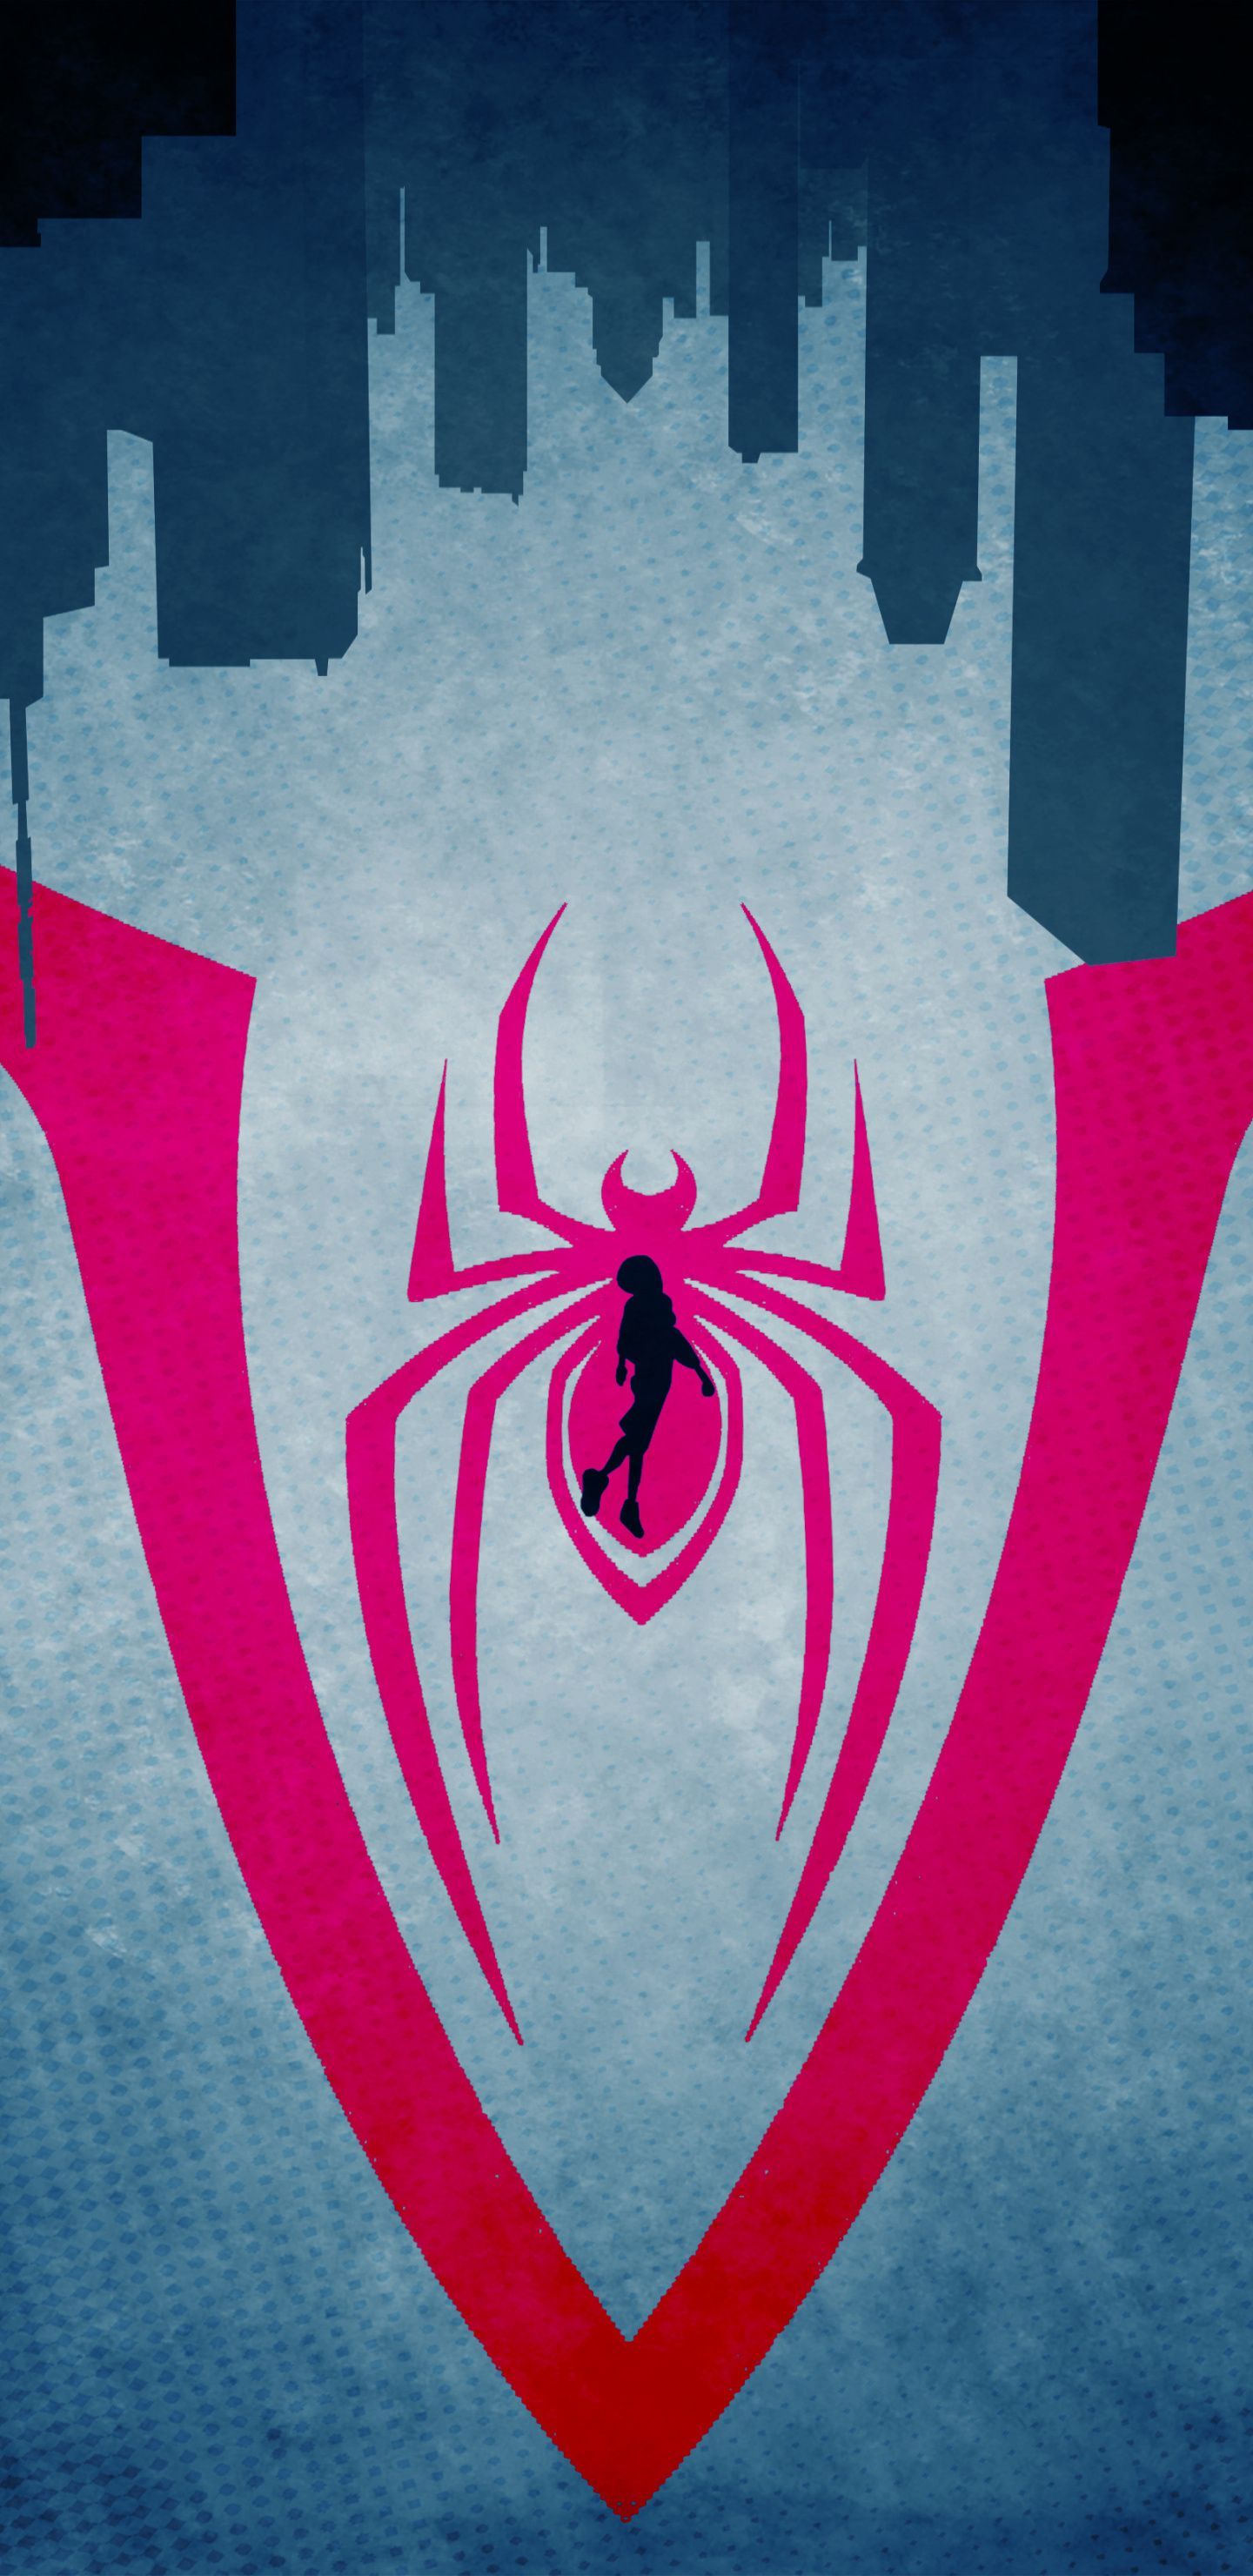 Spider Man: Into The Spider Verse, Spider Man, Illustrated Poster